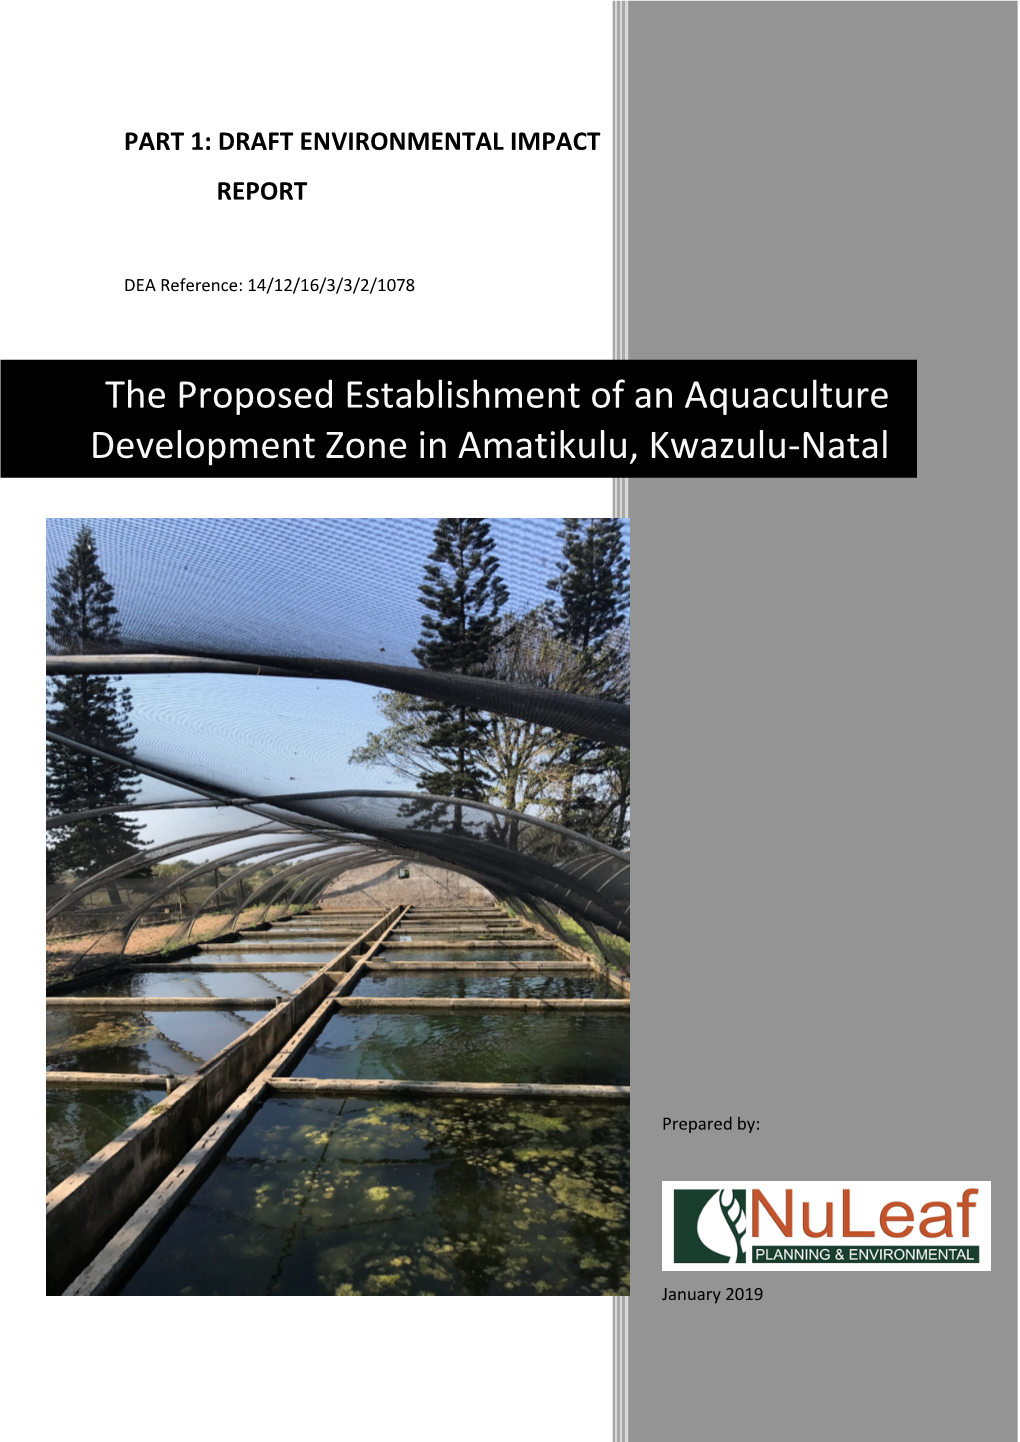 The Proposed Establishment of an Aquaculture Development Zone in Amatikulu, Kwazulu-Natal